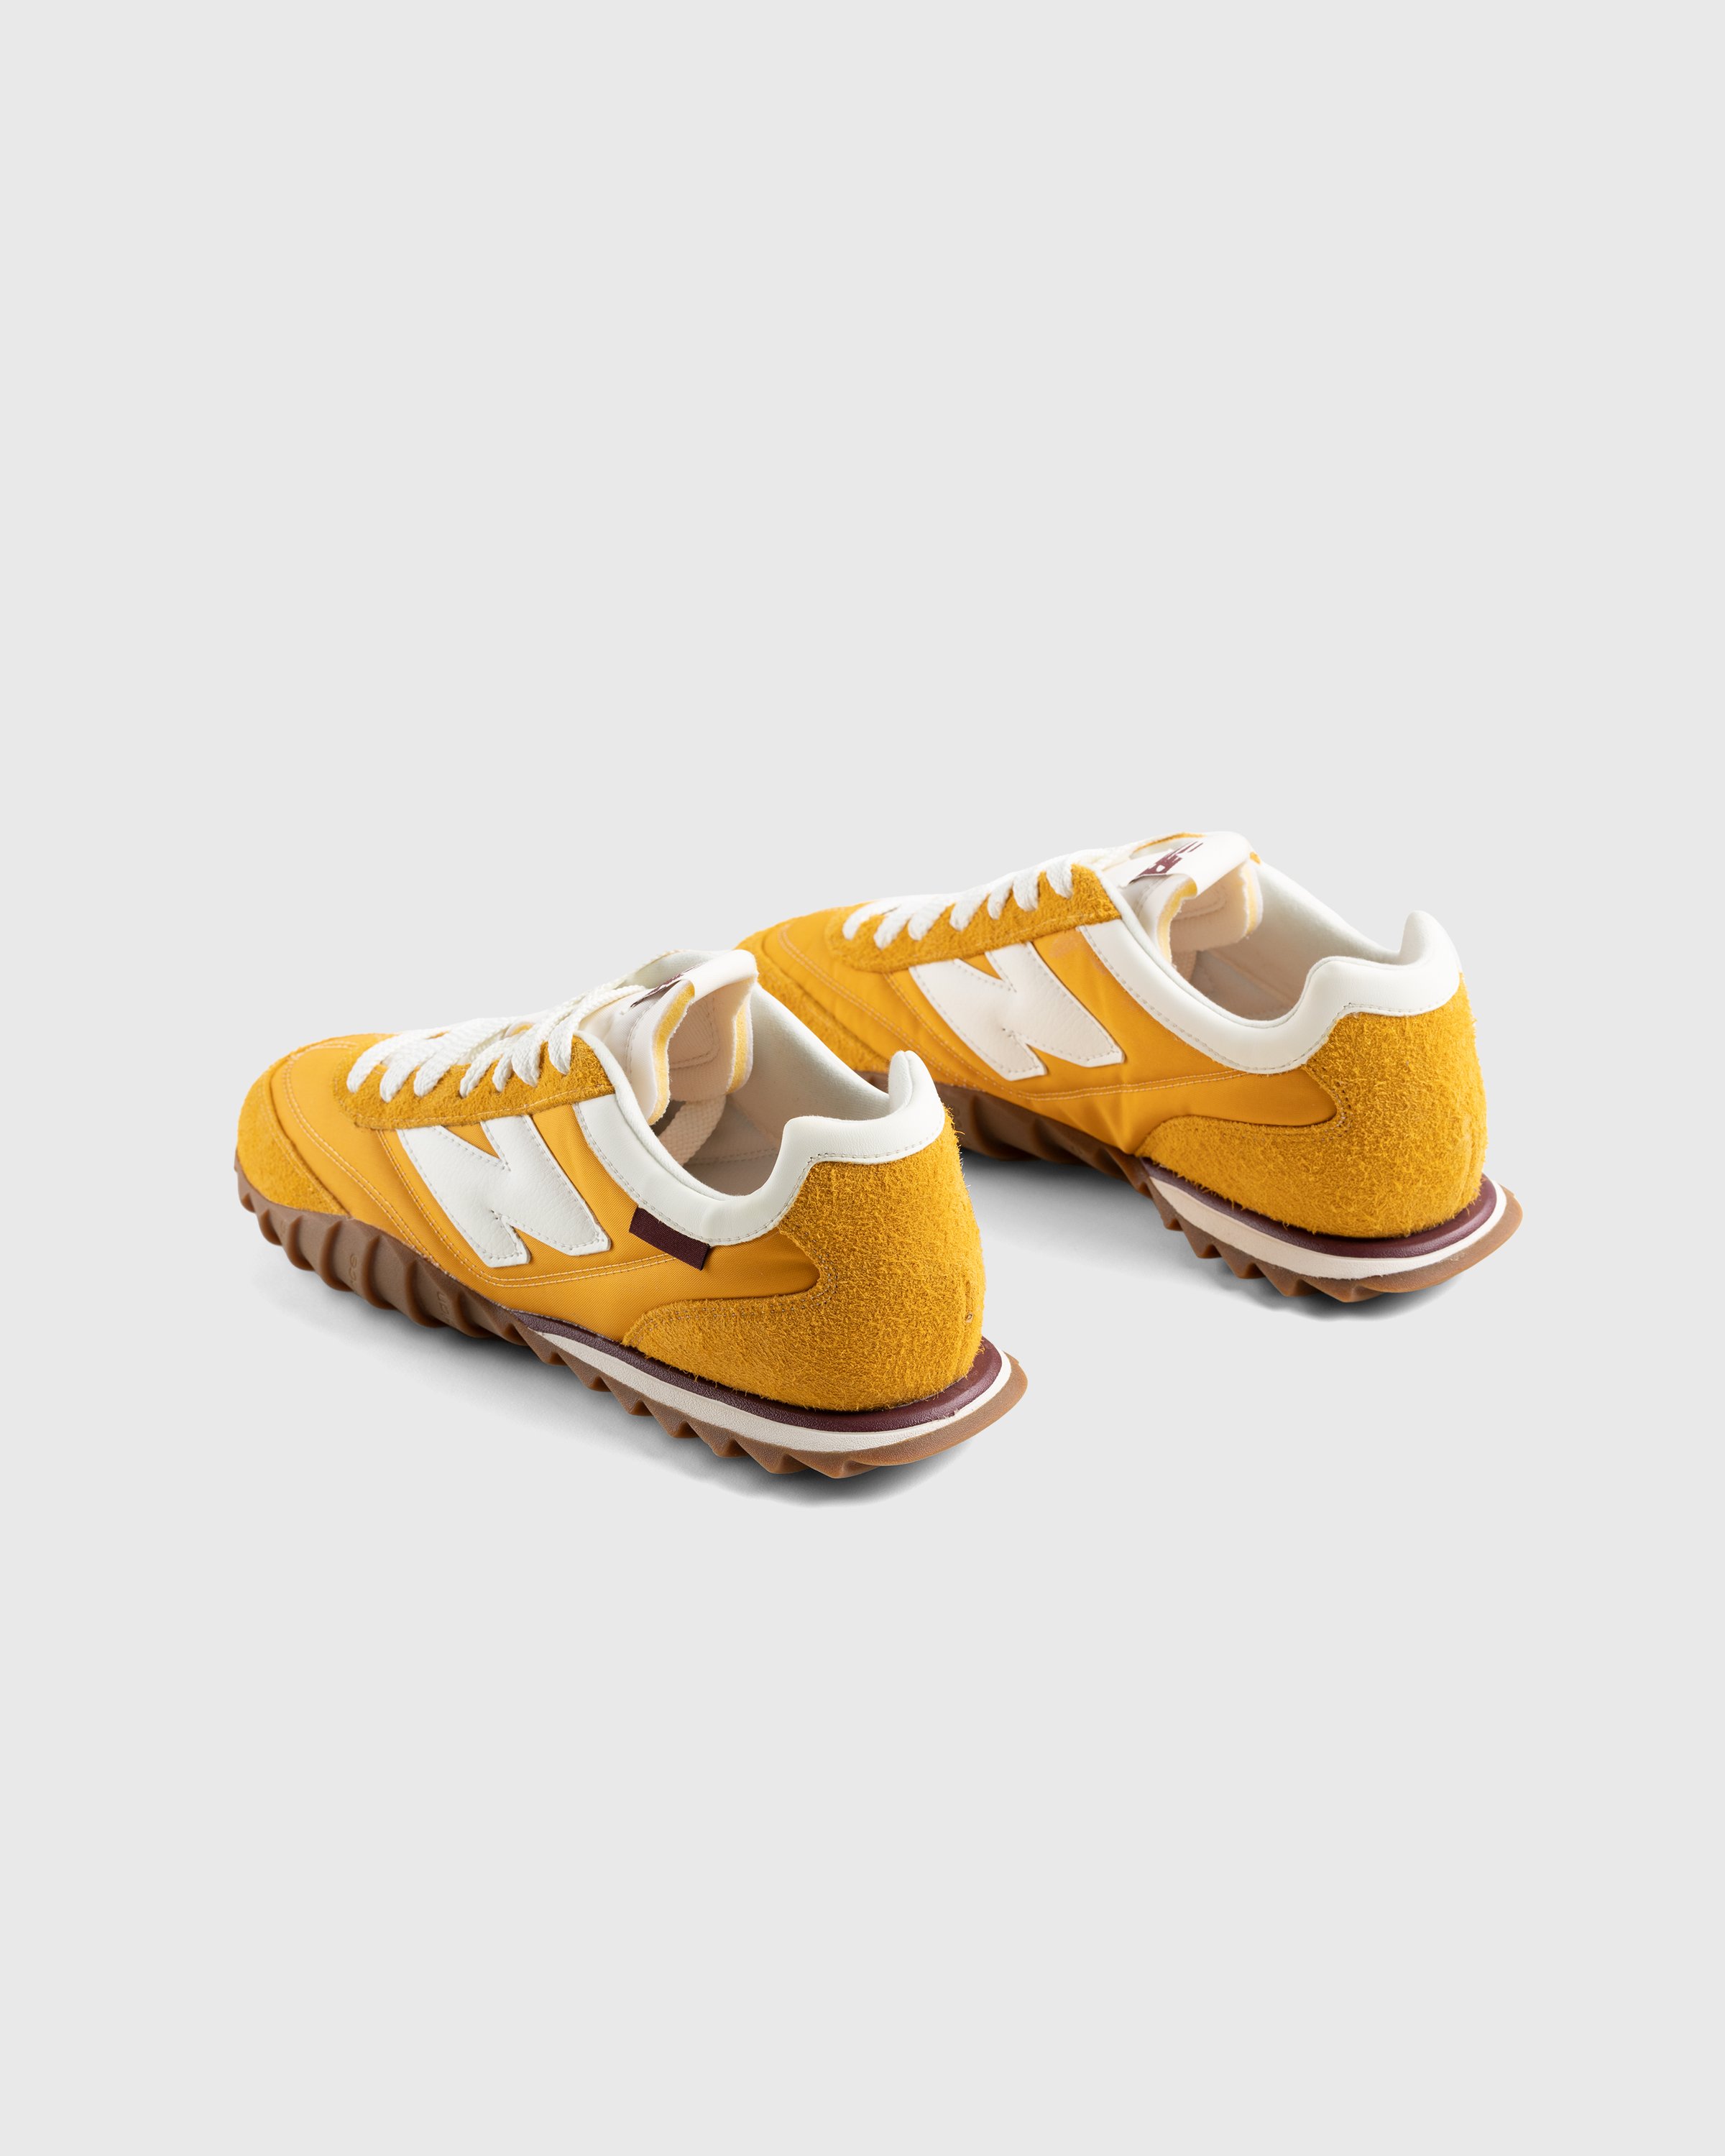 Donald Glover x New Balance - URC30GG Golden Hour - Footwear - Orange - Image 4